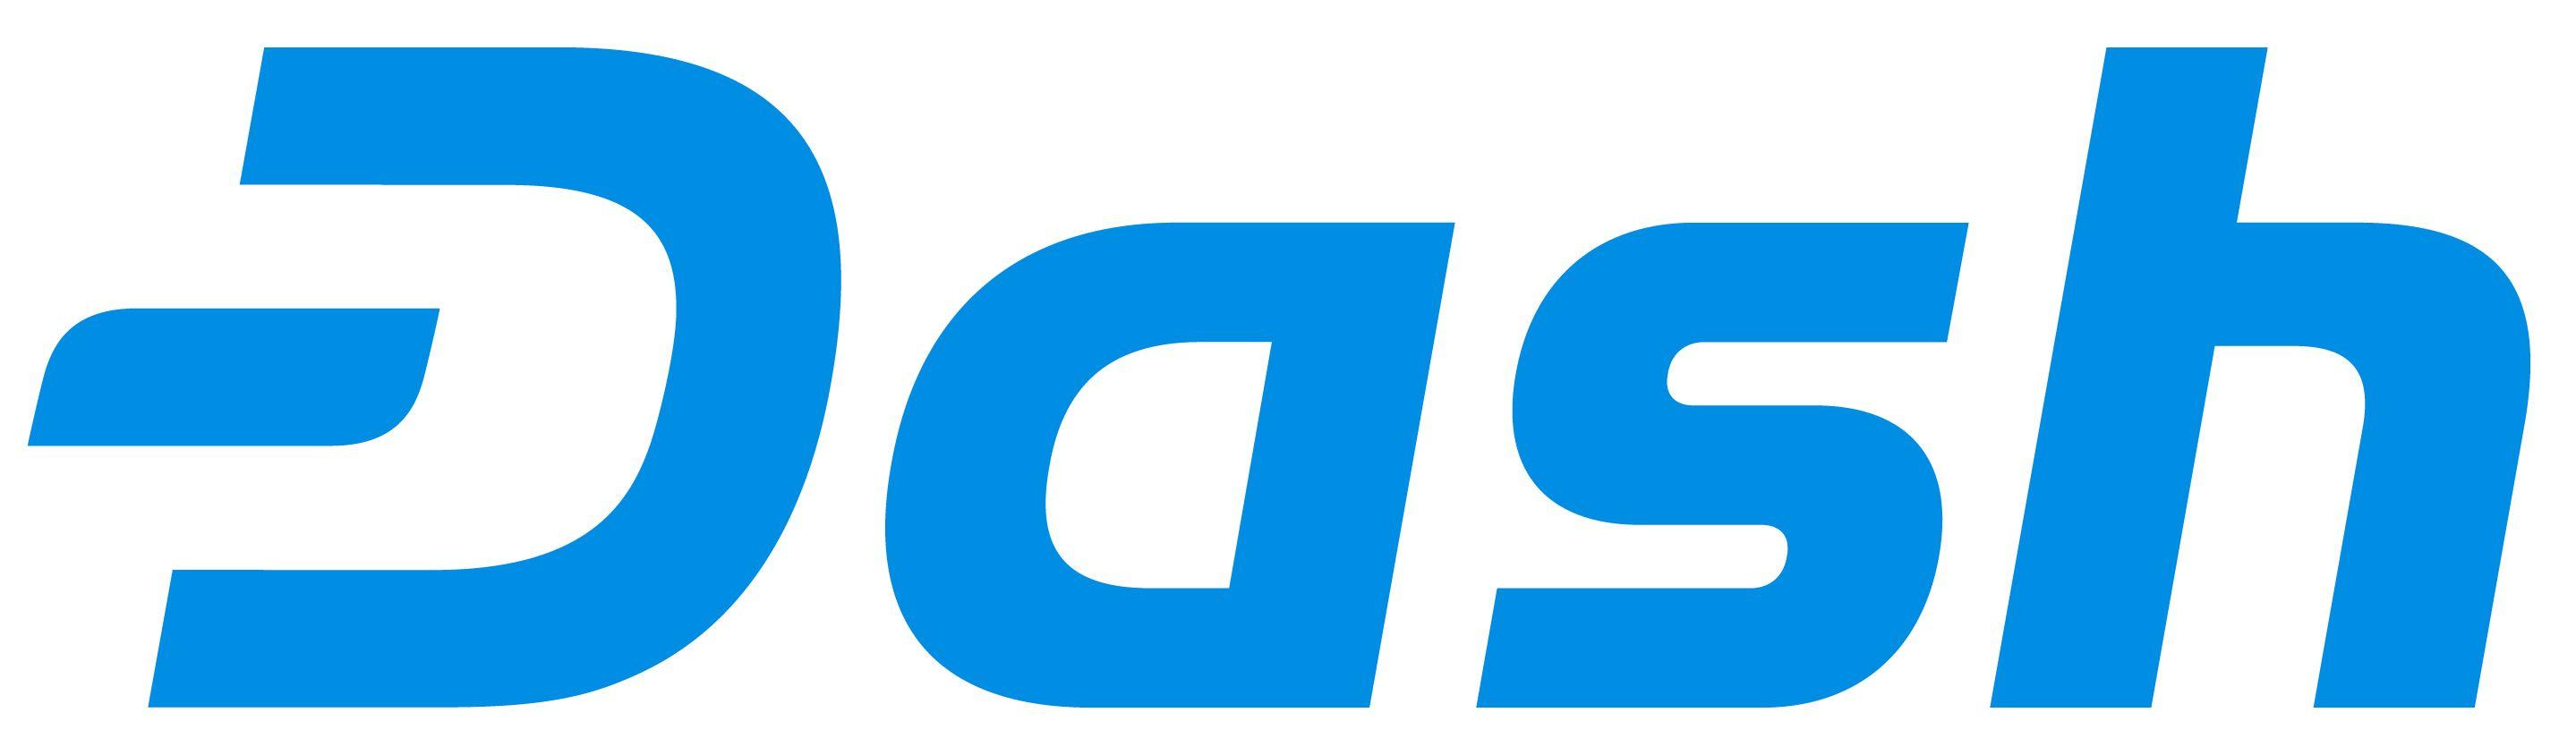 Dash Line Logo - Dash Official Website. Dash Crypto Currency